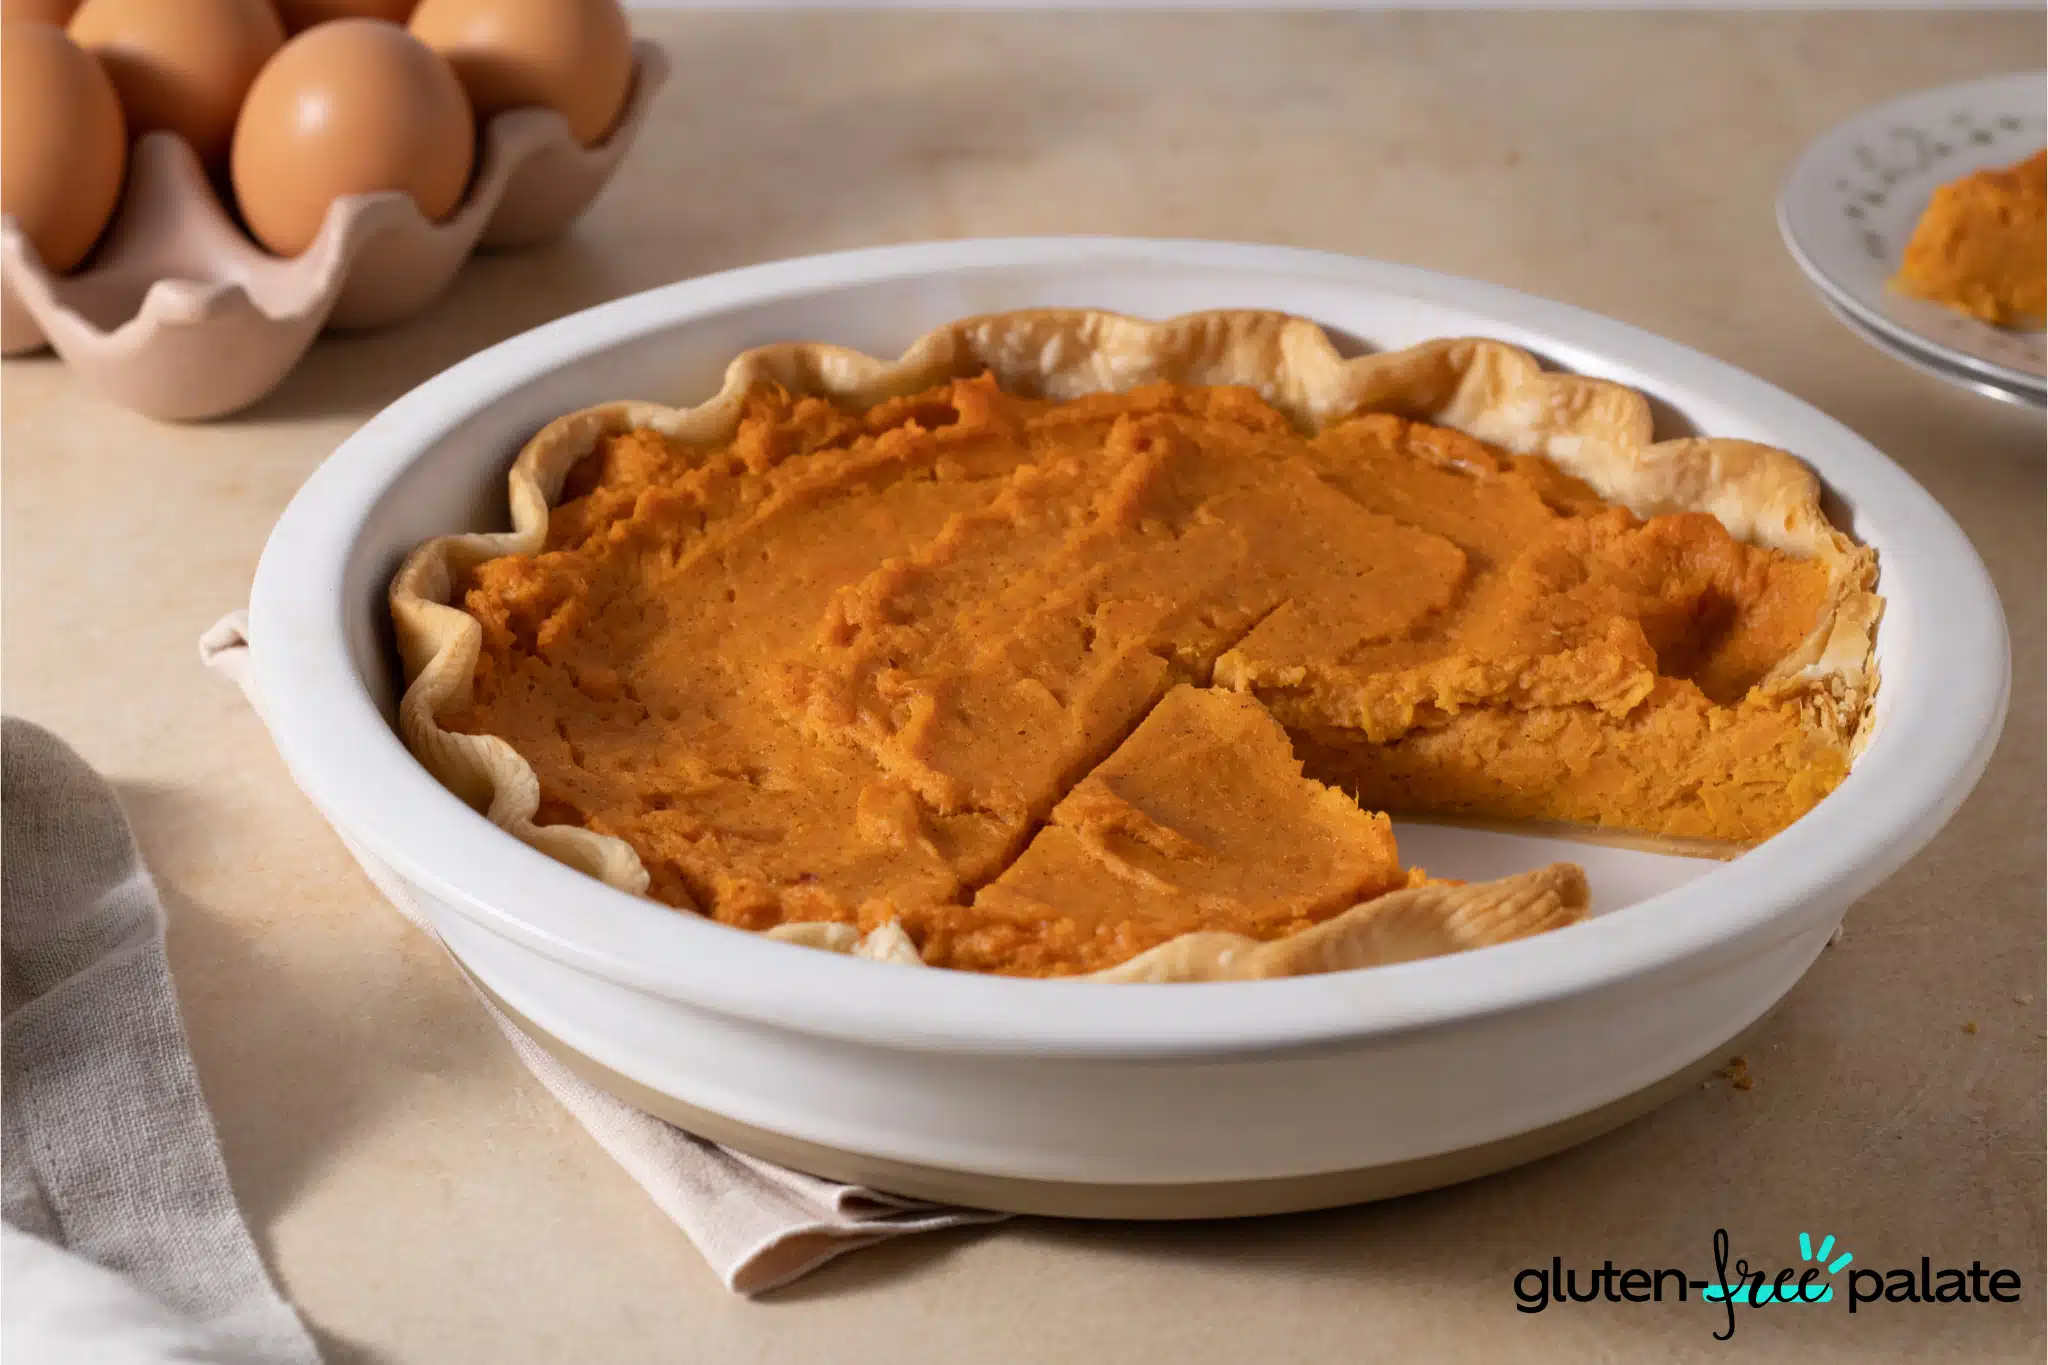 Gluten-Free Sweet Potato Pie in a white dish